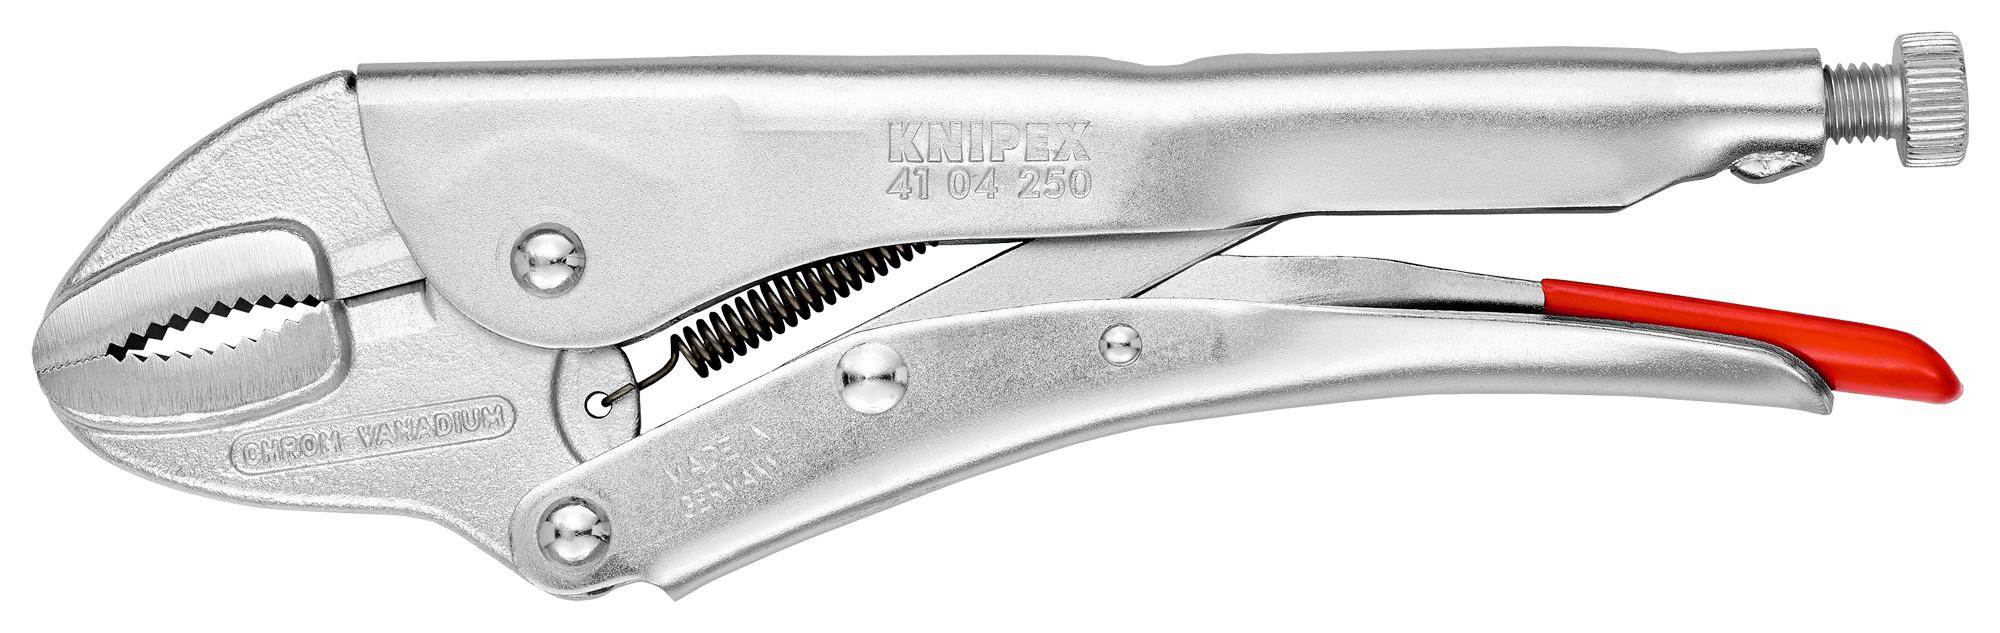 Knipex 41 04 250 Plier, Grip, 8-40mm